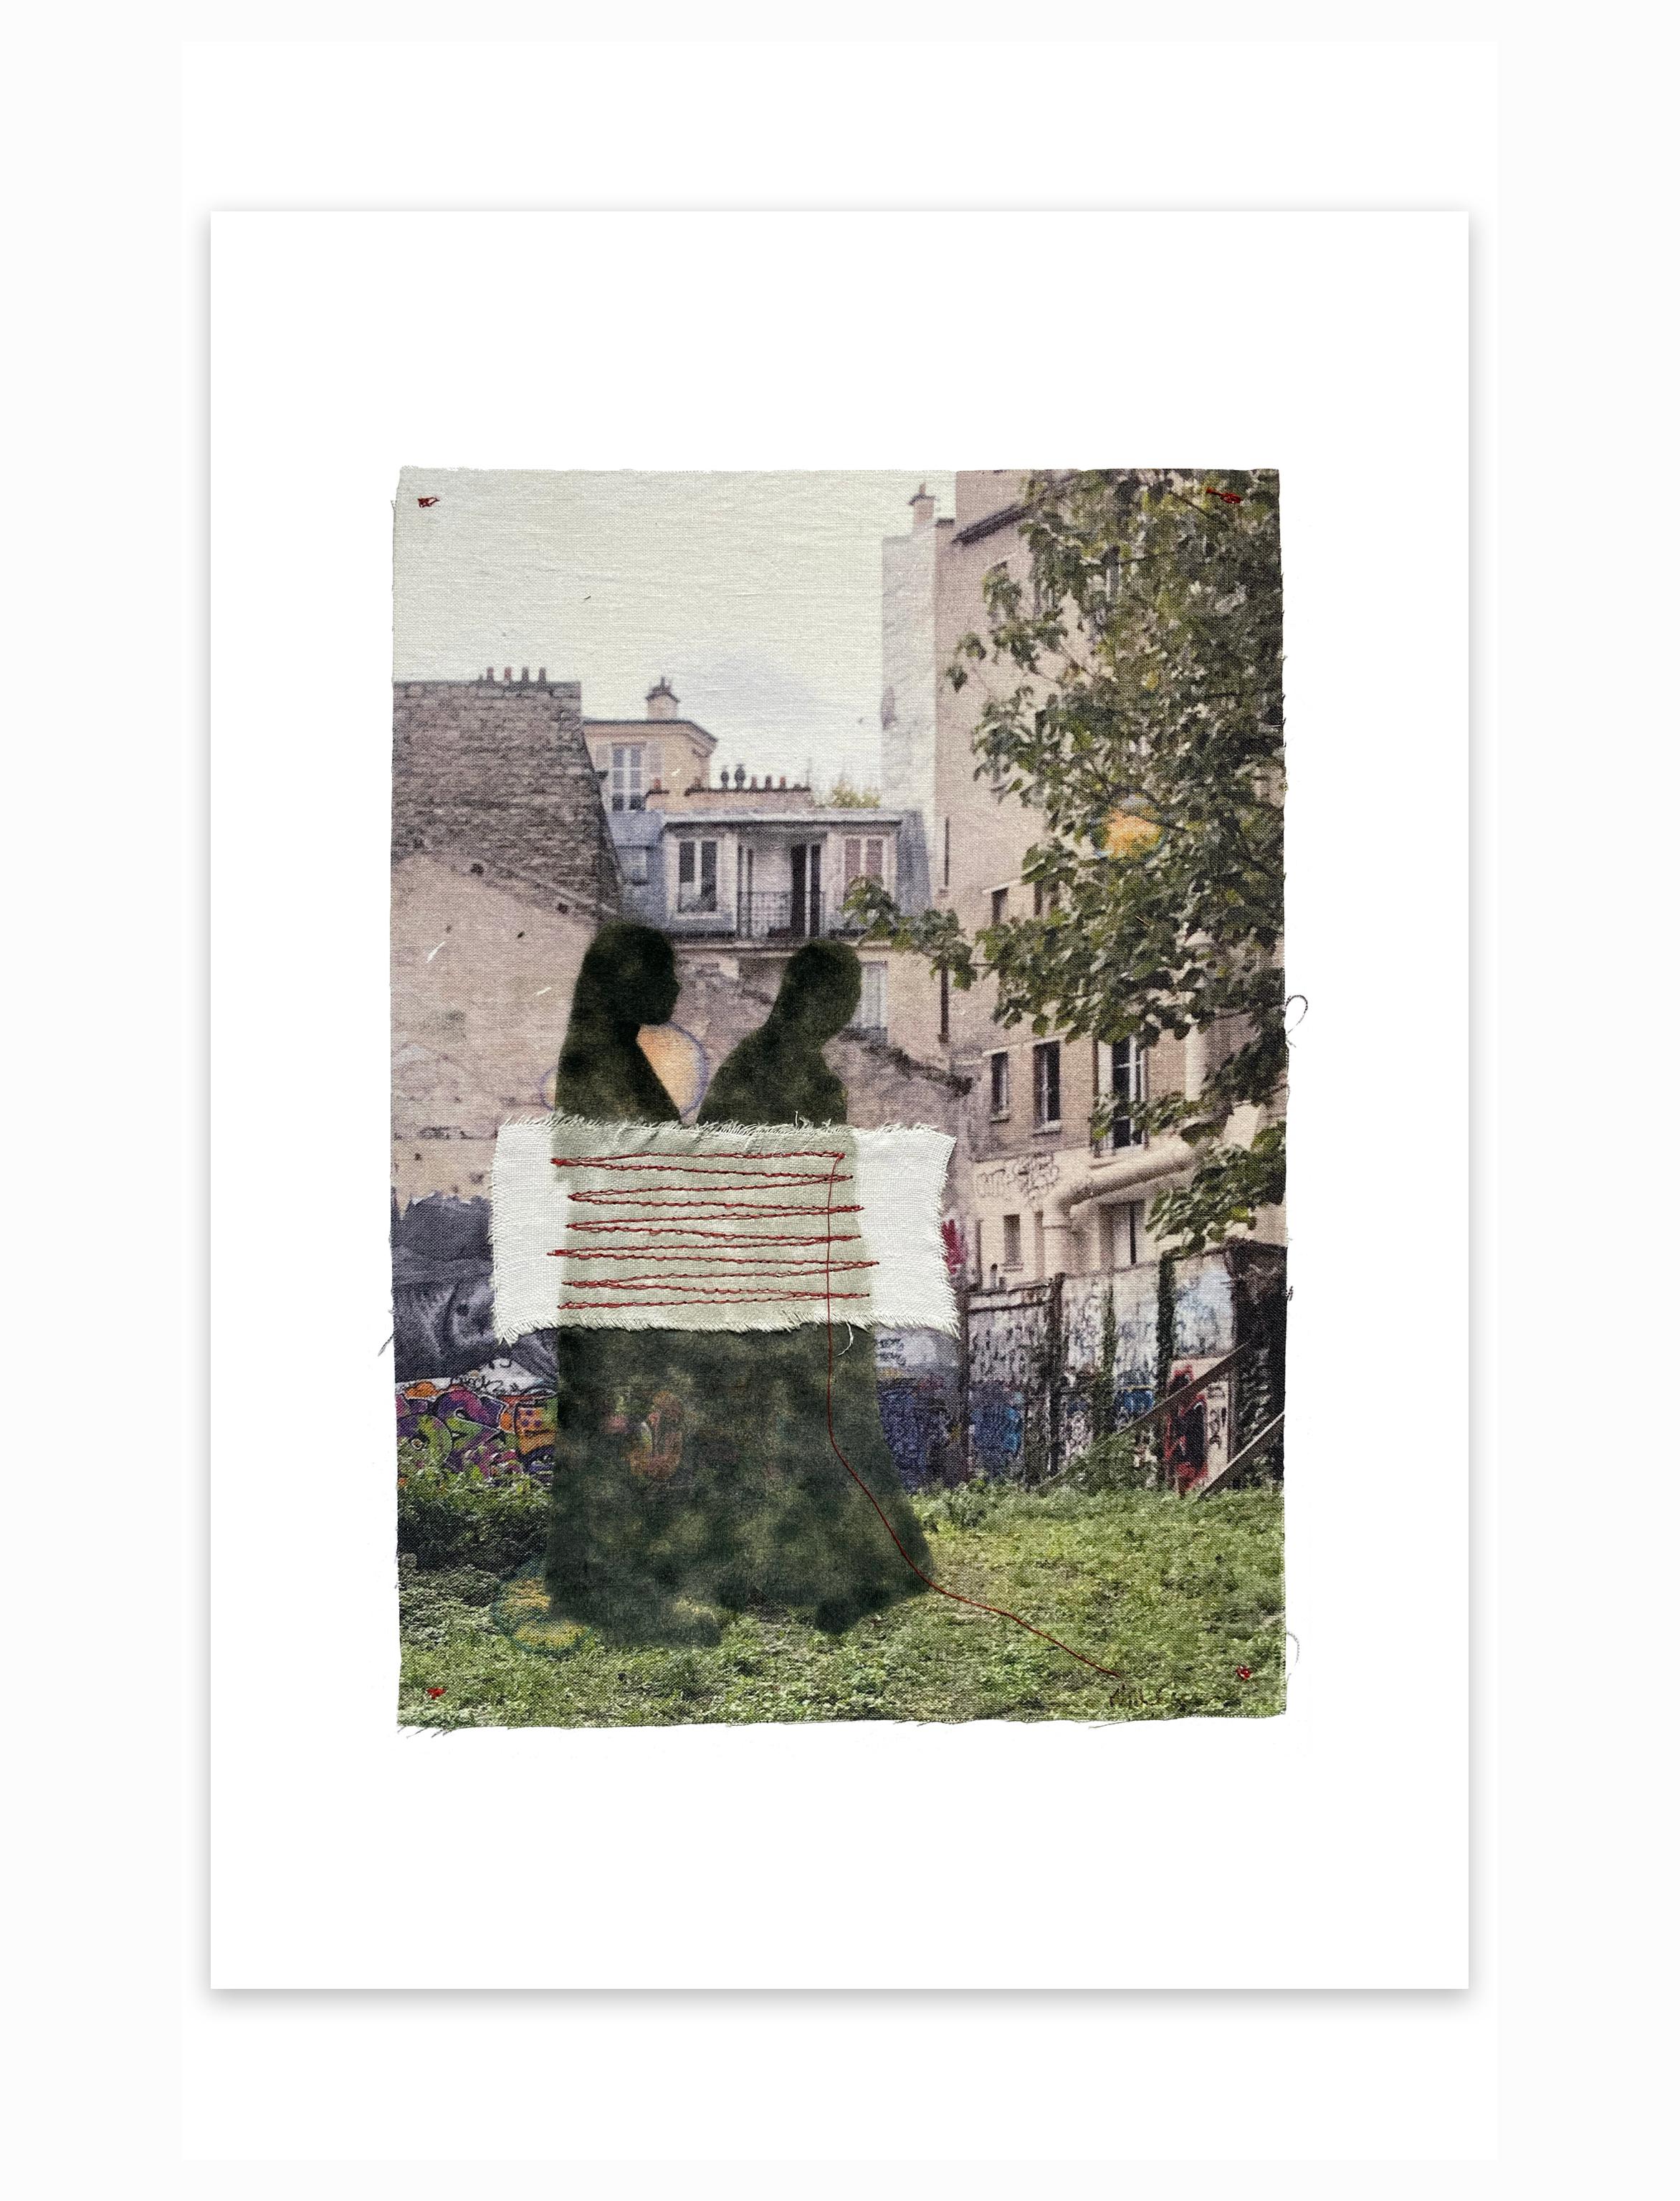 Stella -soft color contemporary figurative photo transfer on paper with thread